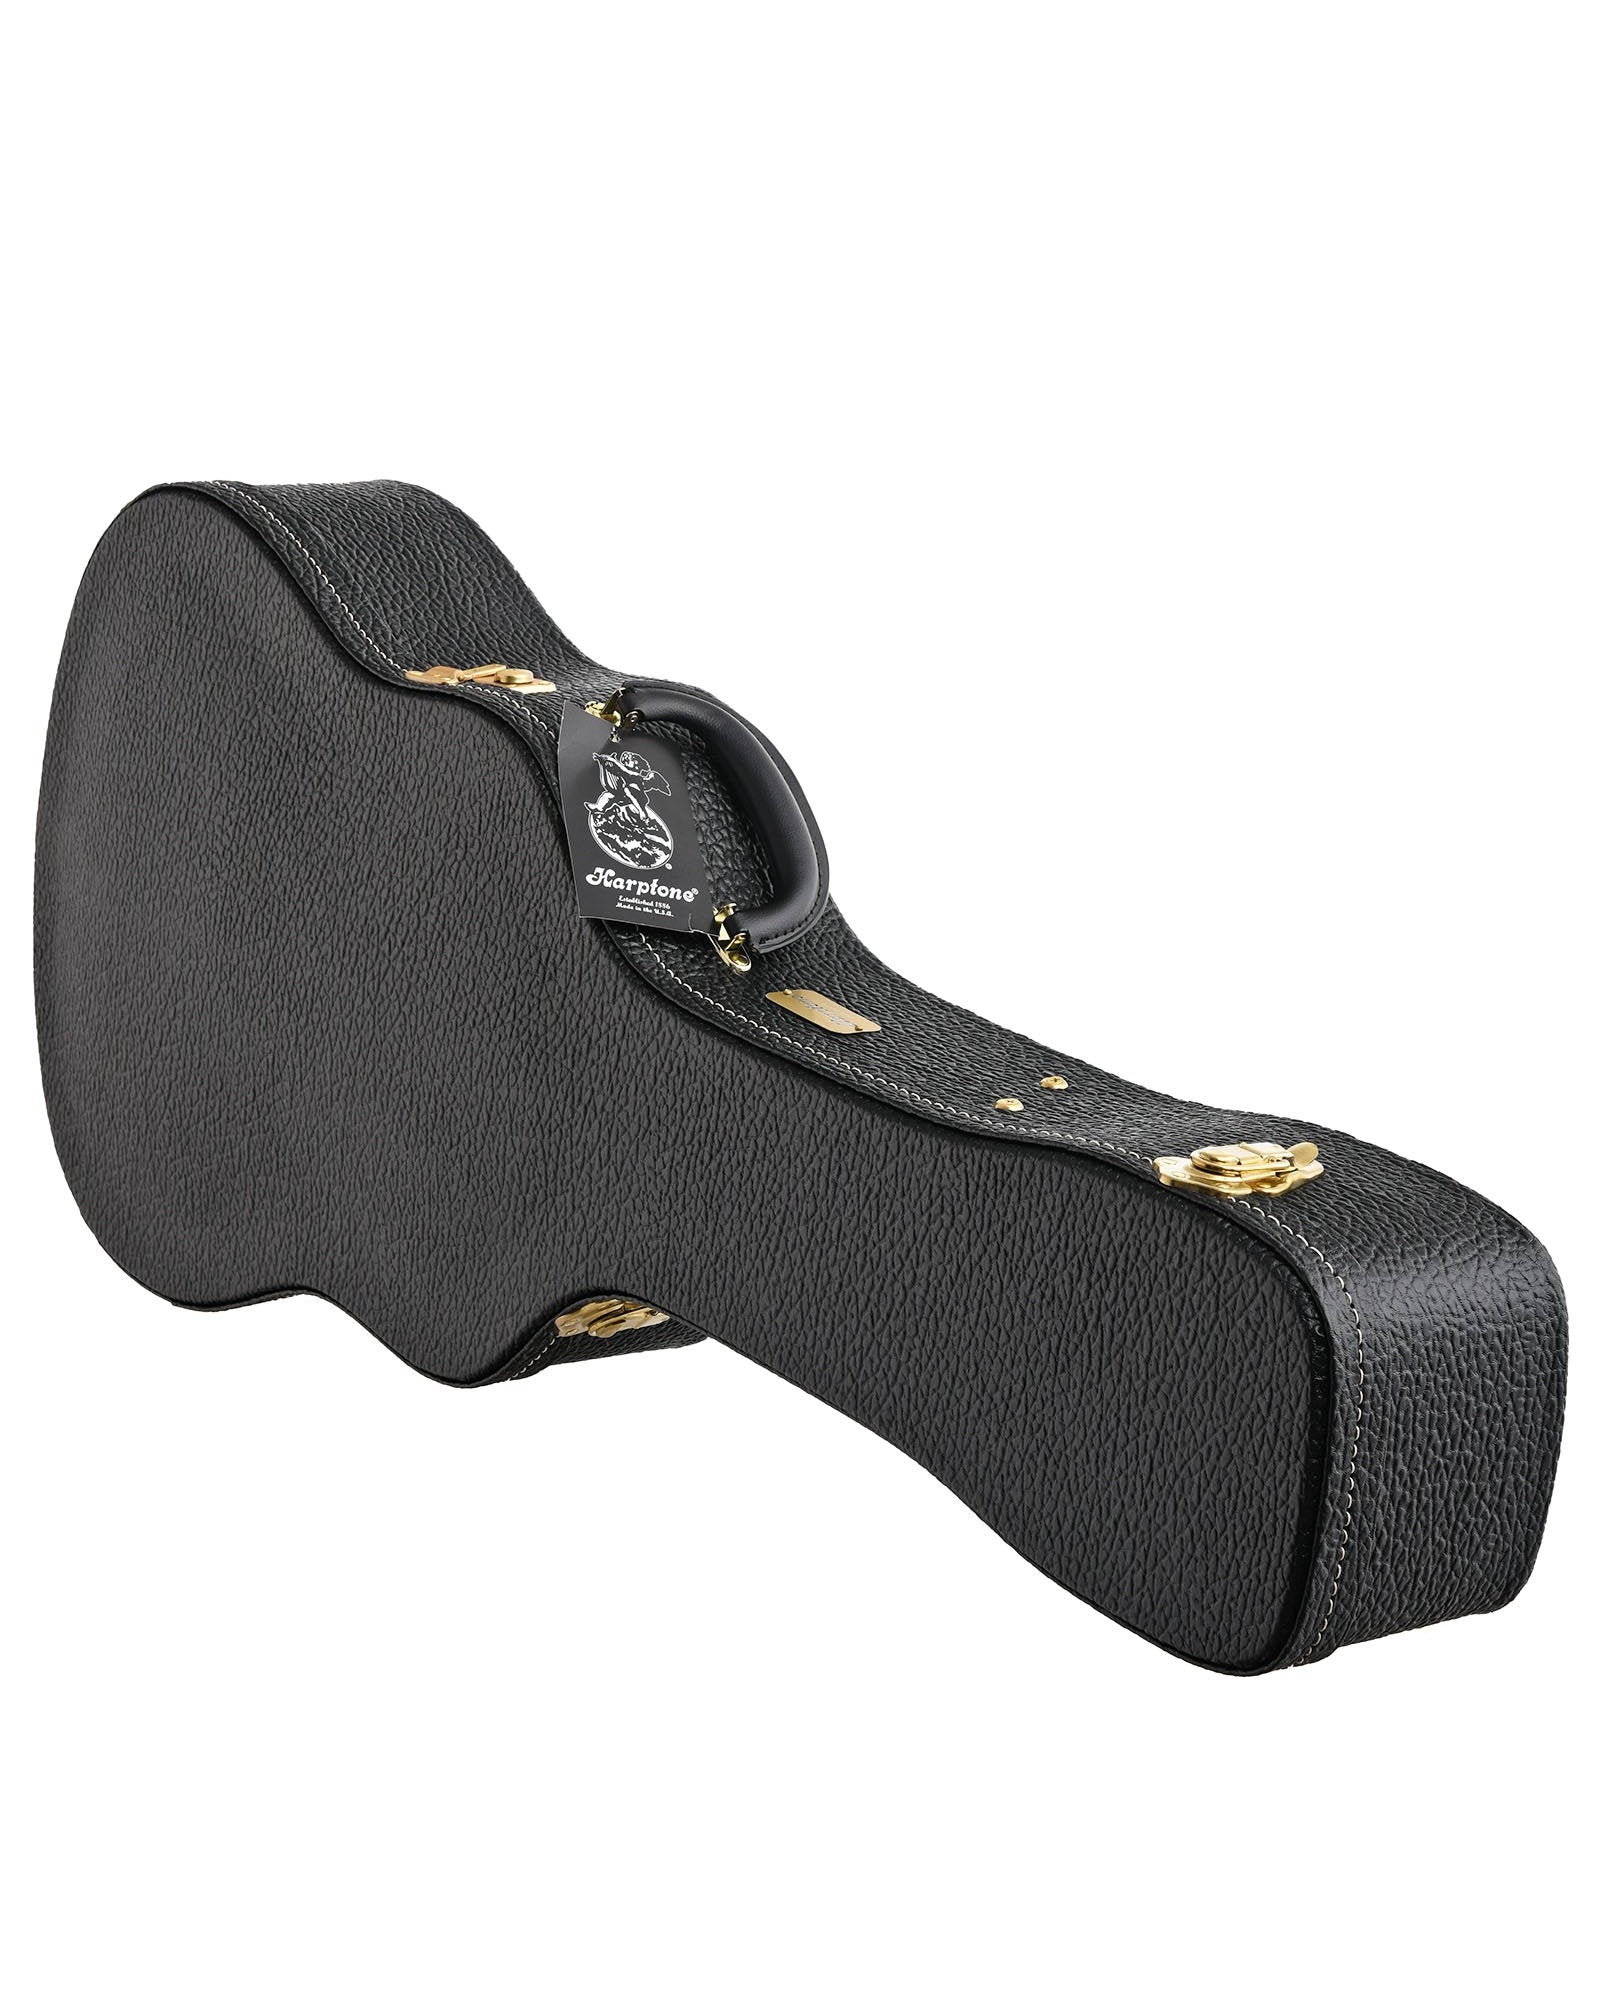 Image 1 of Harptone Historic OM/14-Fret 000 Guitar Case (Model HPT-215) - SKU# GCHH-OM : Product Type Accessories & Parts : Elderly Instruments